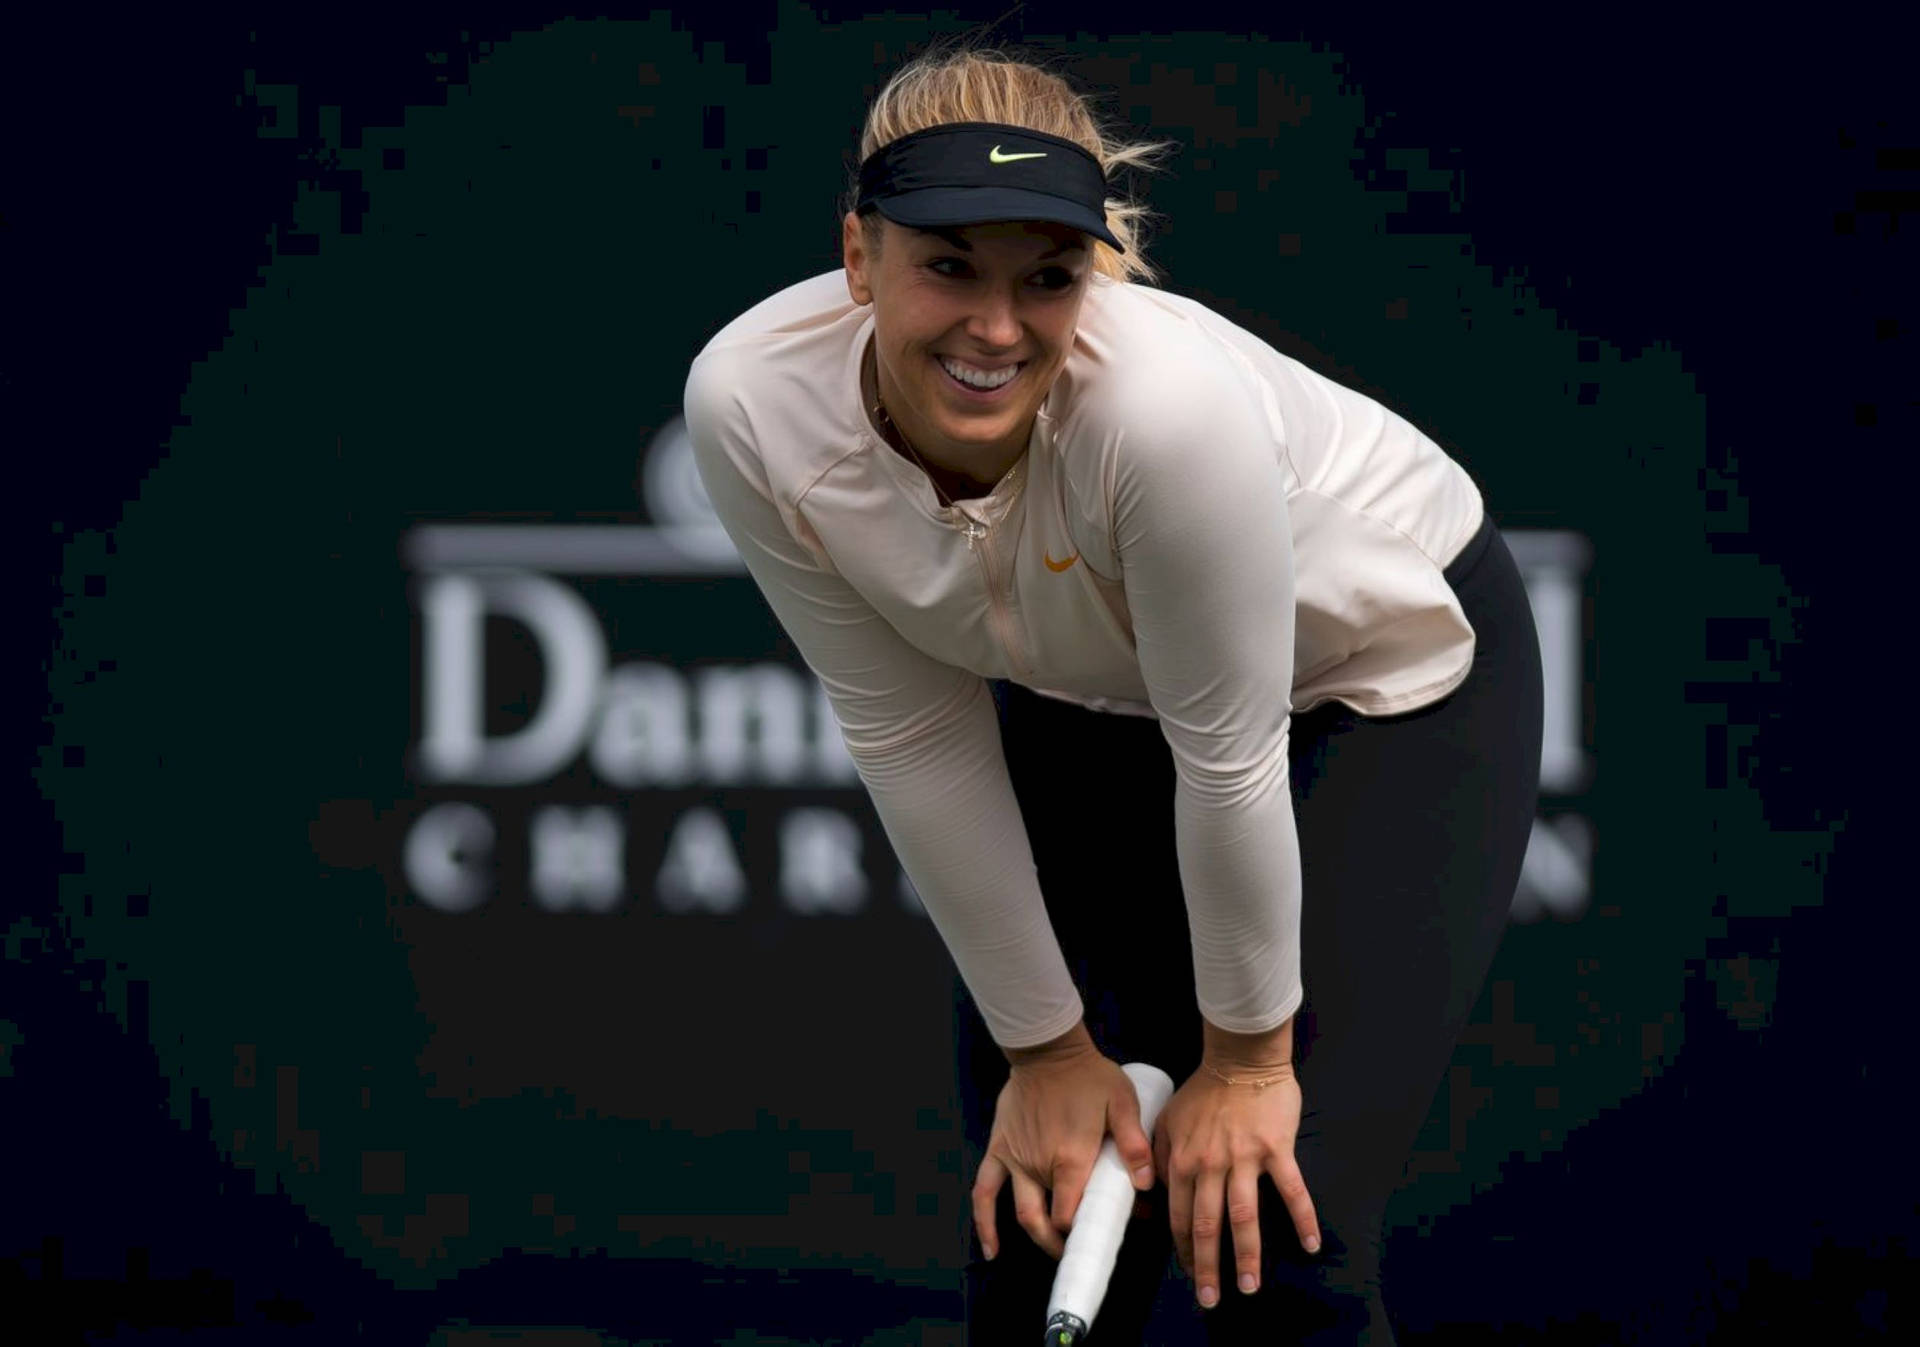 Pretty Sabine Lisicki Tennis Player Wallpaper